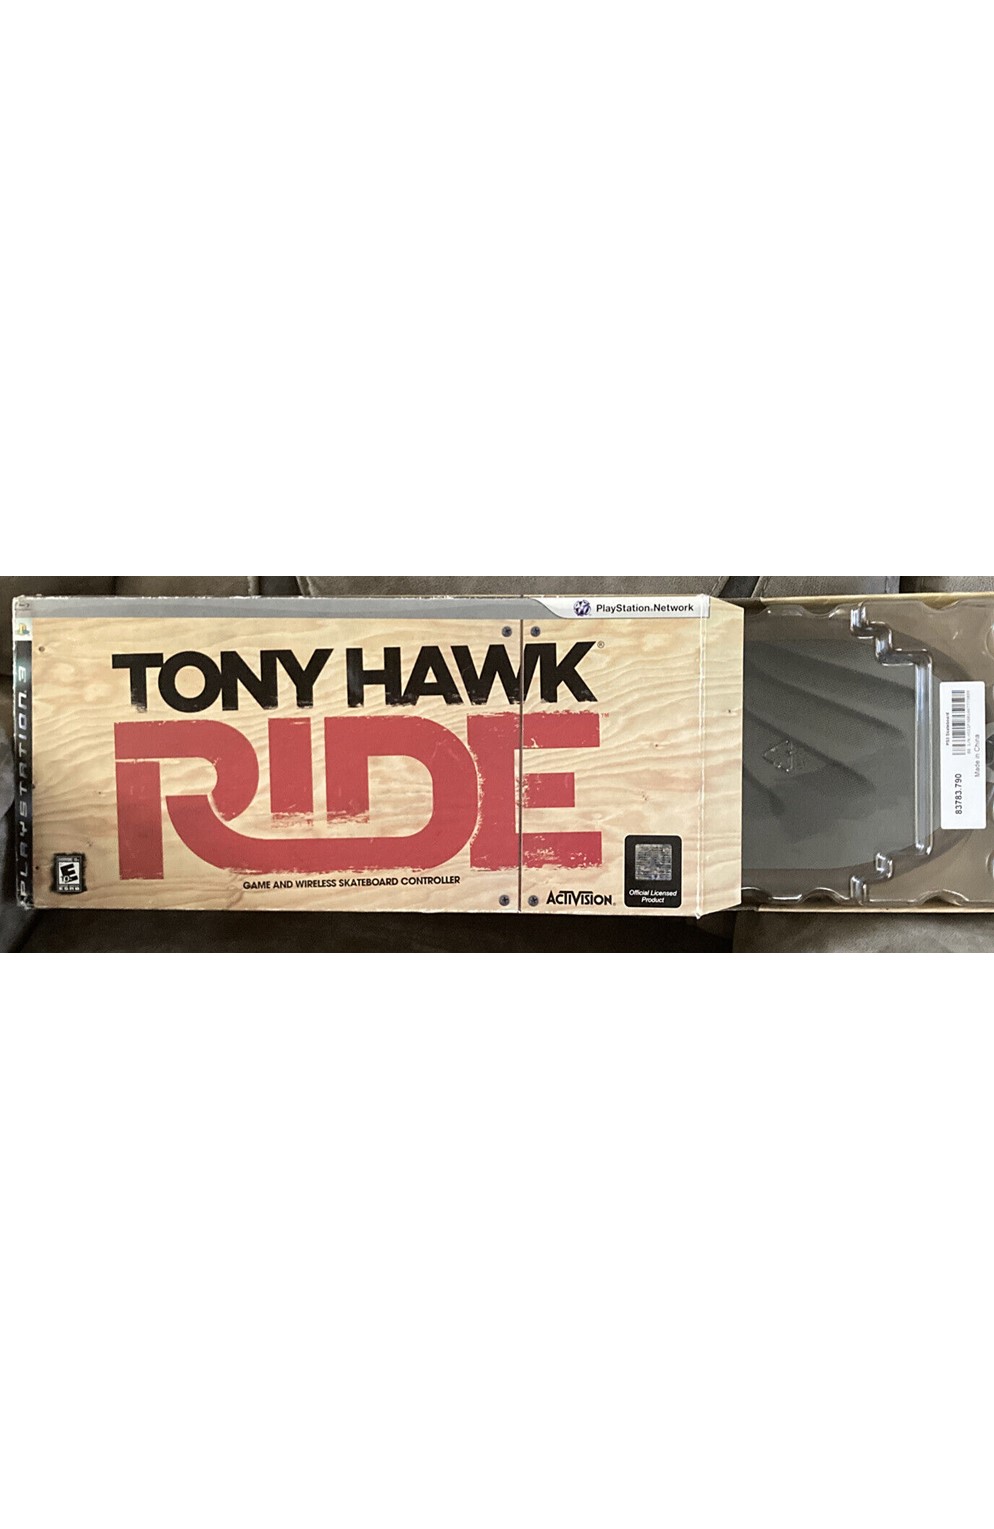 Ps3 Tony Hawk Ride Cib